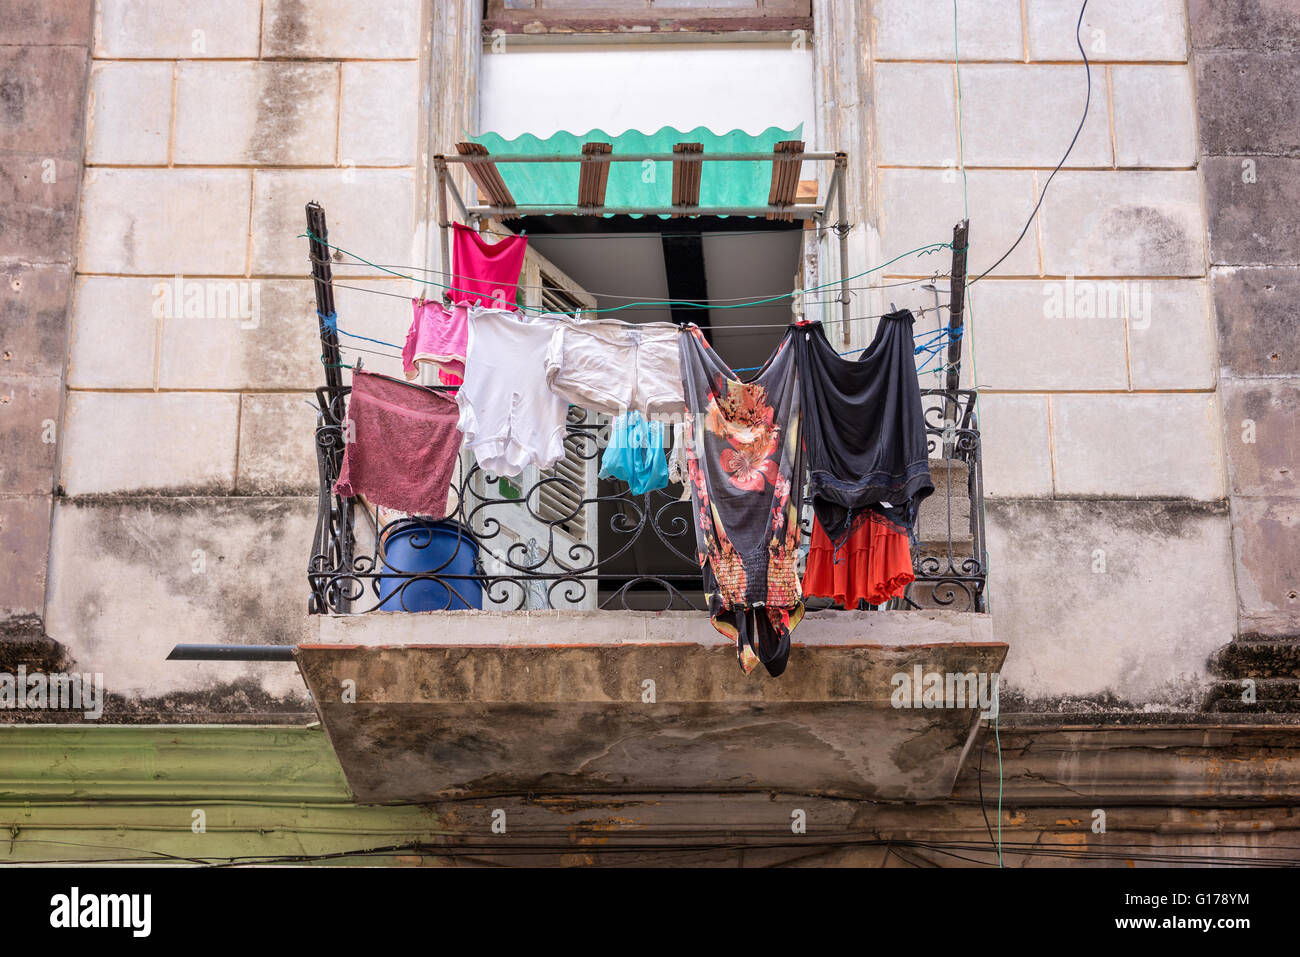 Laundry on the balcony of an old  building, Old Havana, Cuba Stock Photo